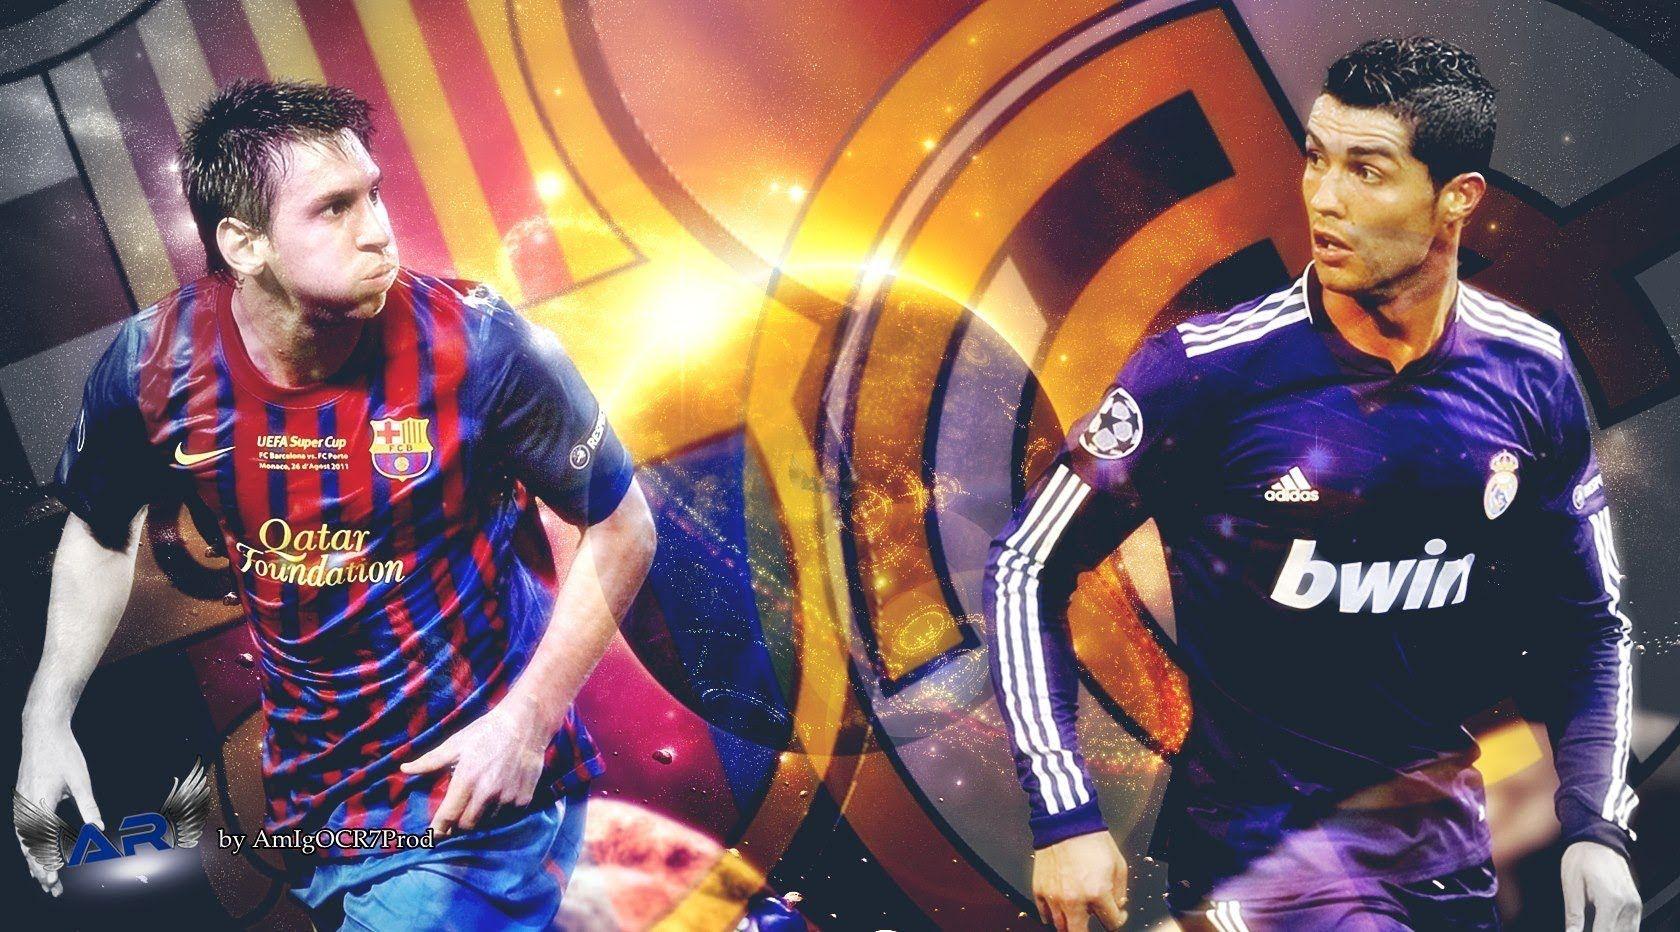 Cristiano Ronaldo Vs Messi 2014 Wallpaper Image Desktop